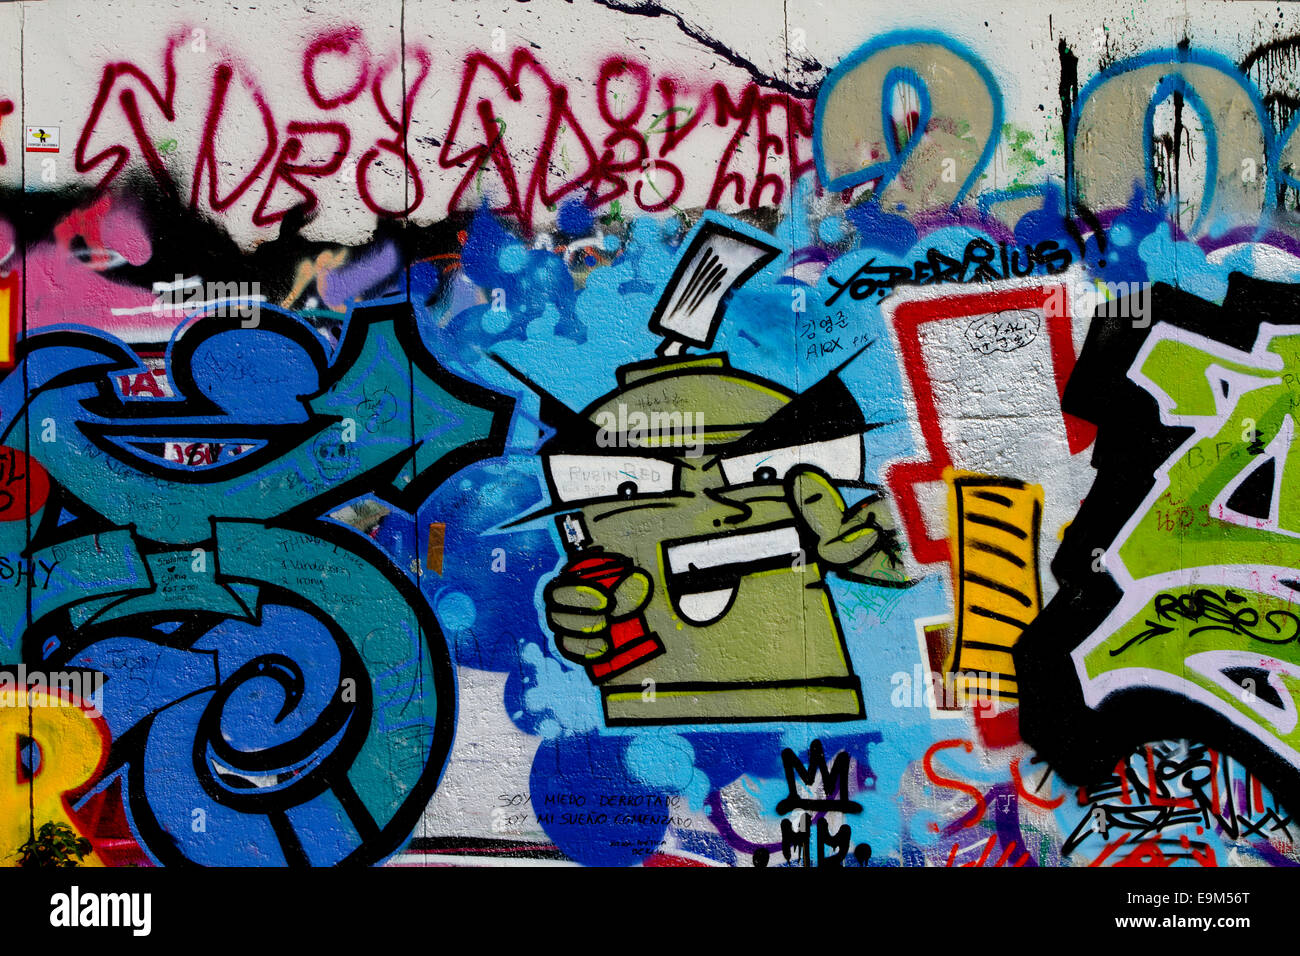 Street art Graffiti Mur de Berlin de personnages de dessins animés Banque D'Images